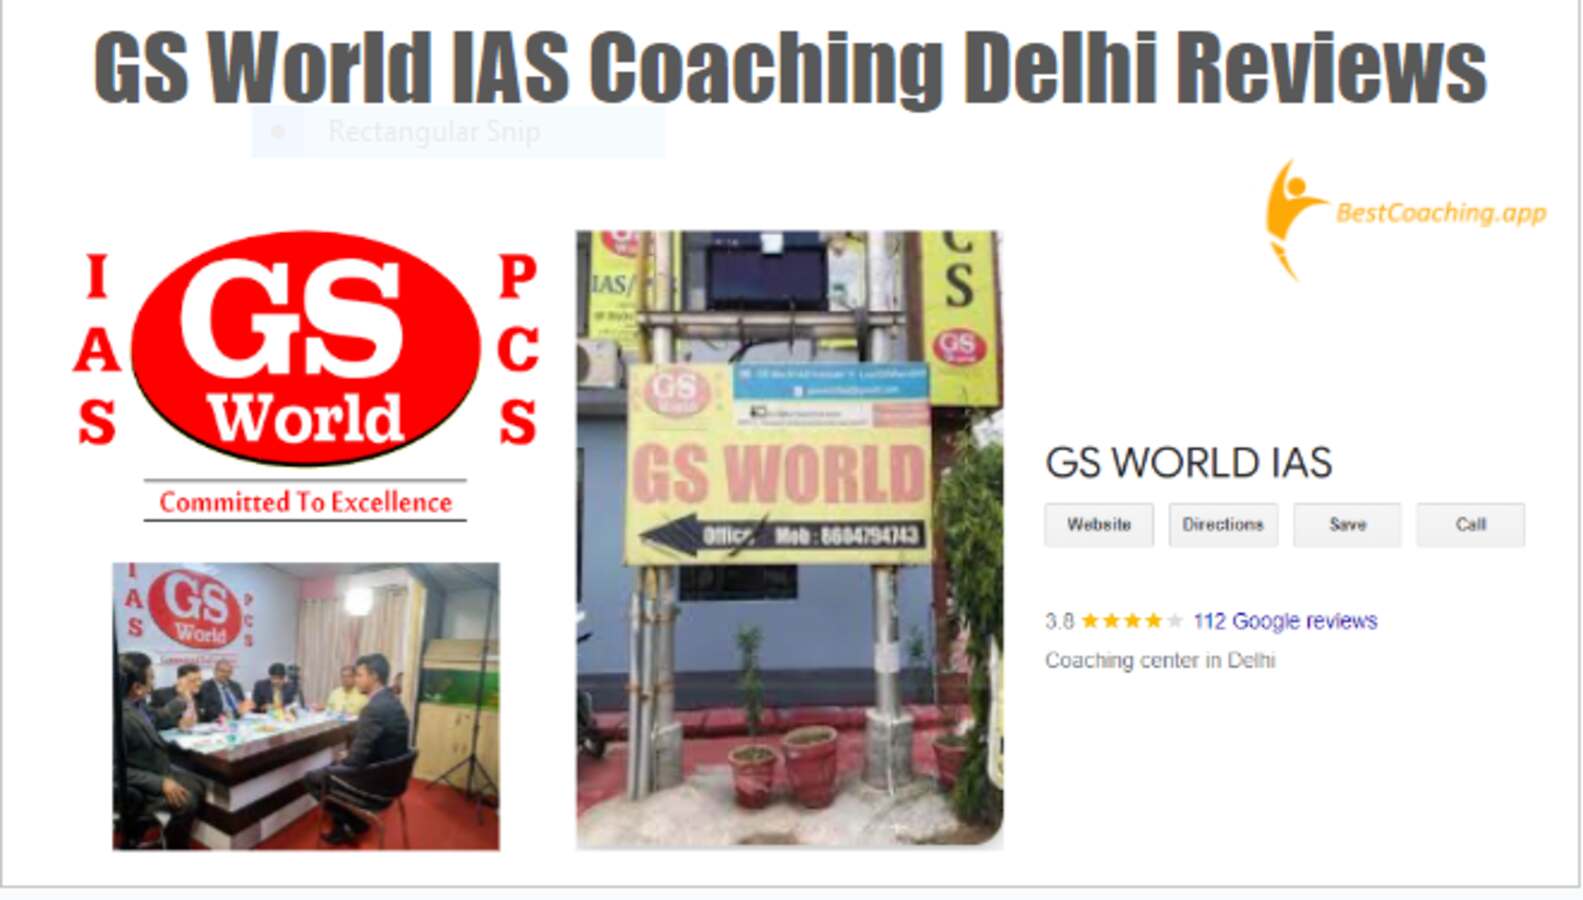 GS World IAS Coaching Delhi Reviews